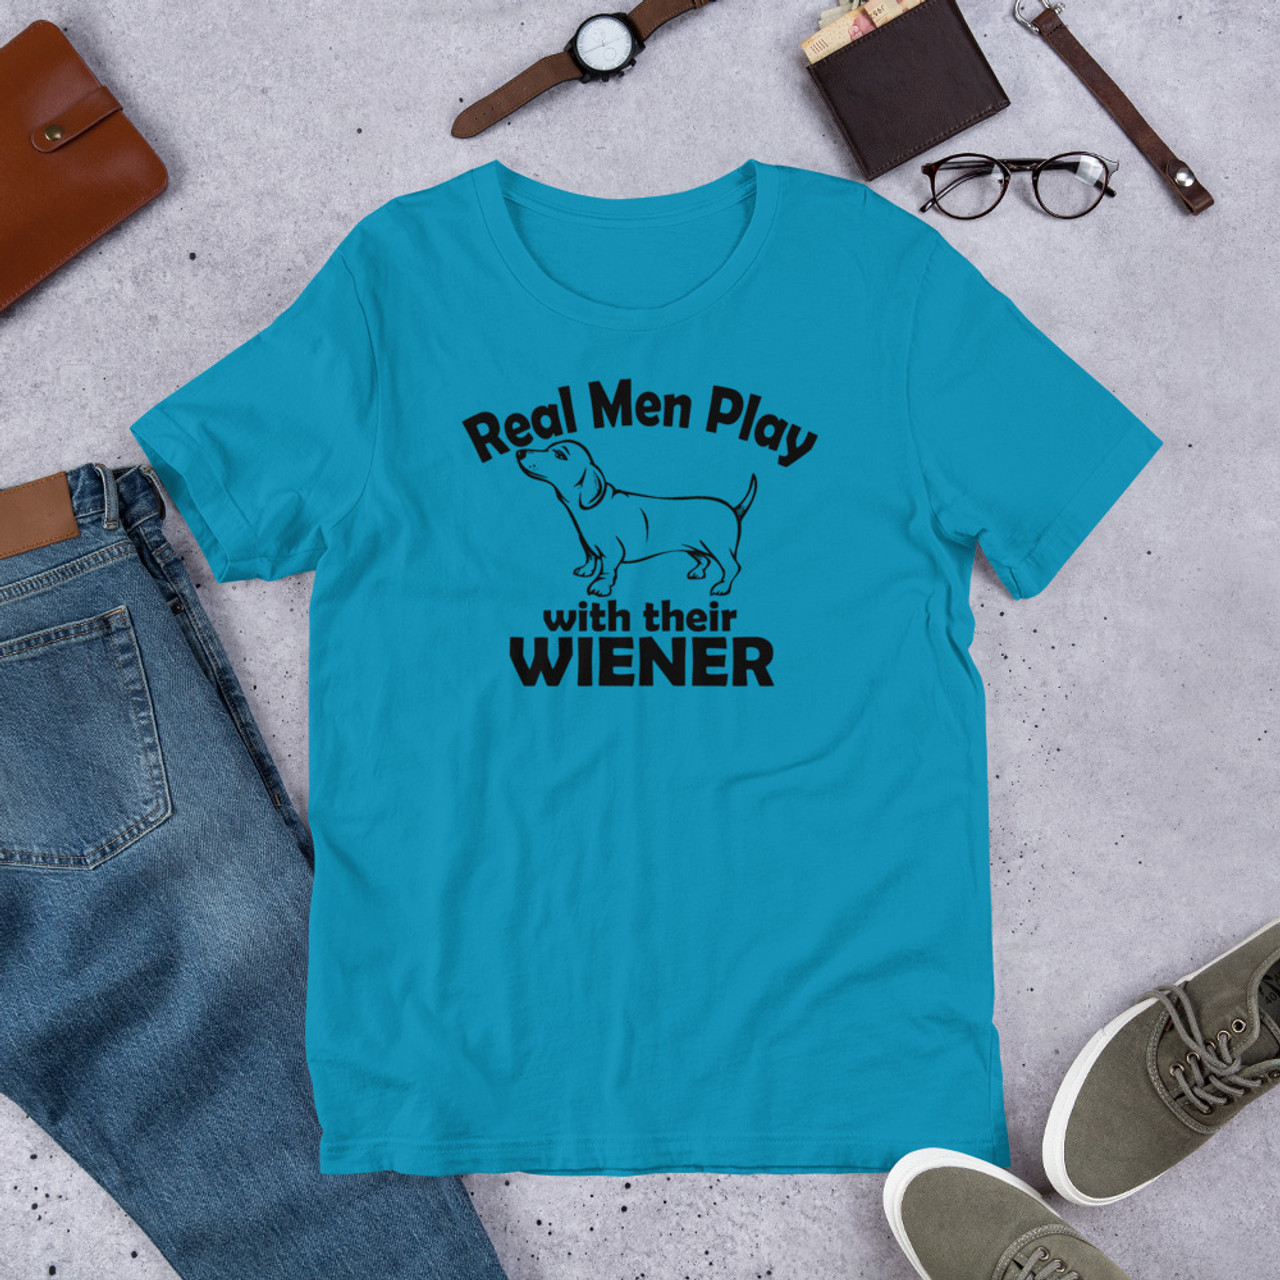 Aqua T-Shirt - Bella + Canvas 3001 Real Men Play With Their Wiener